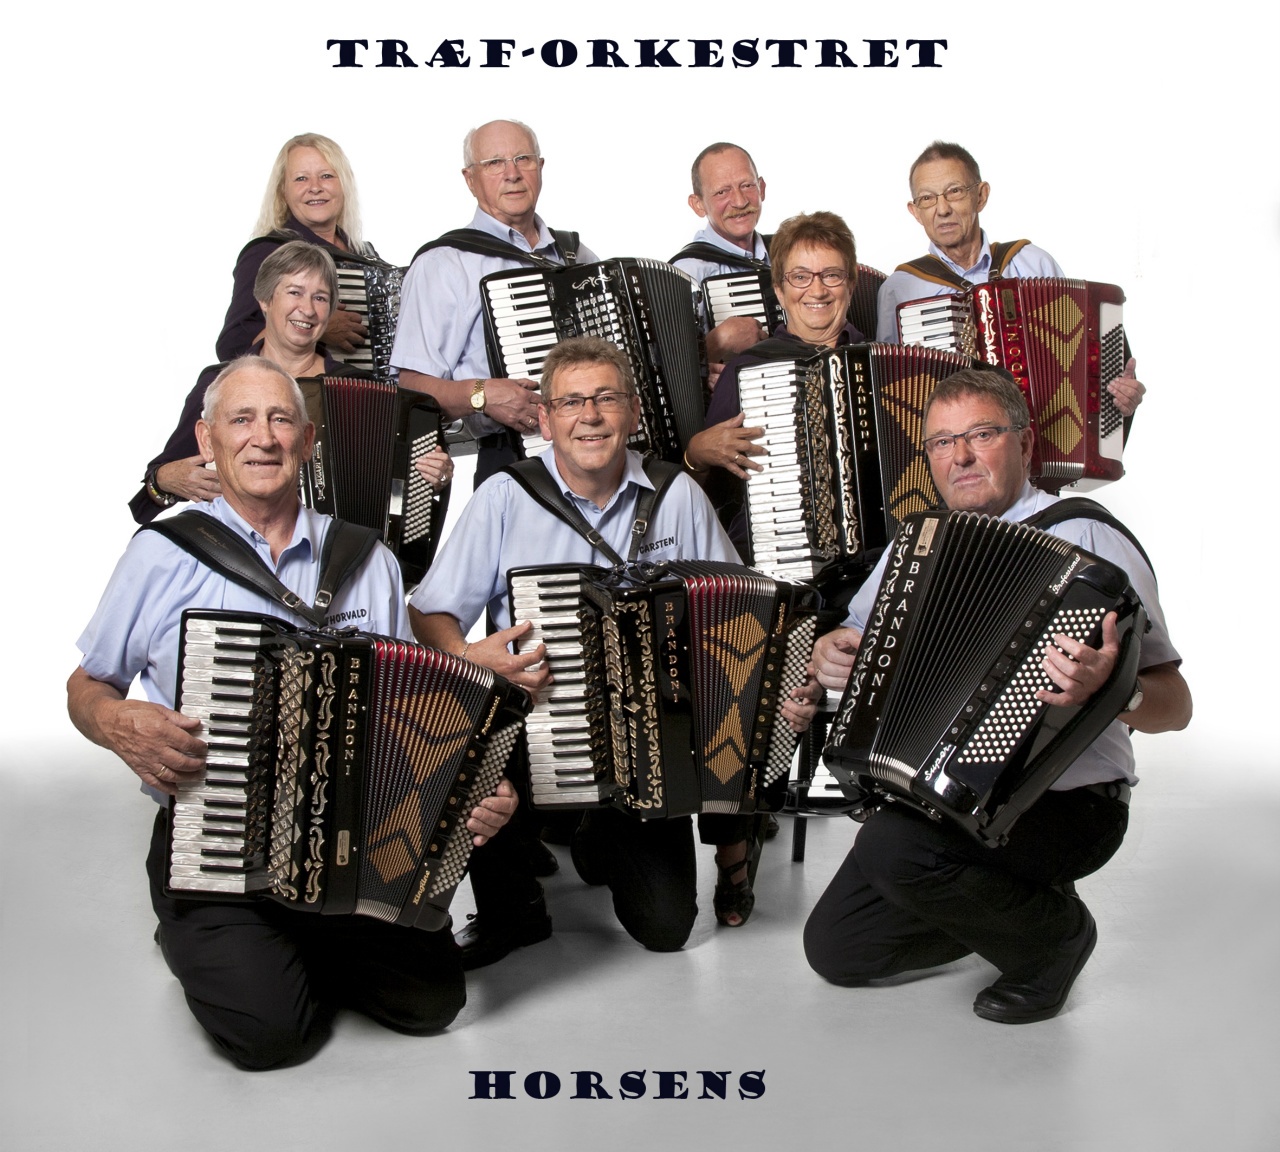 traef-orkestret horsens1